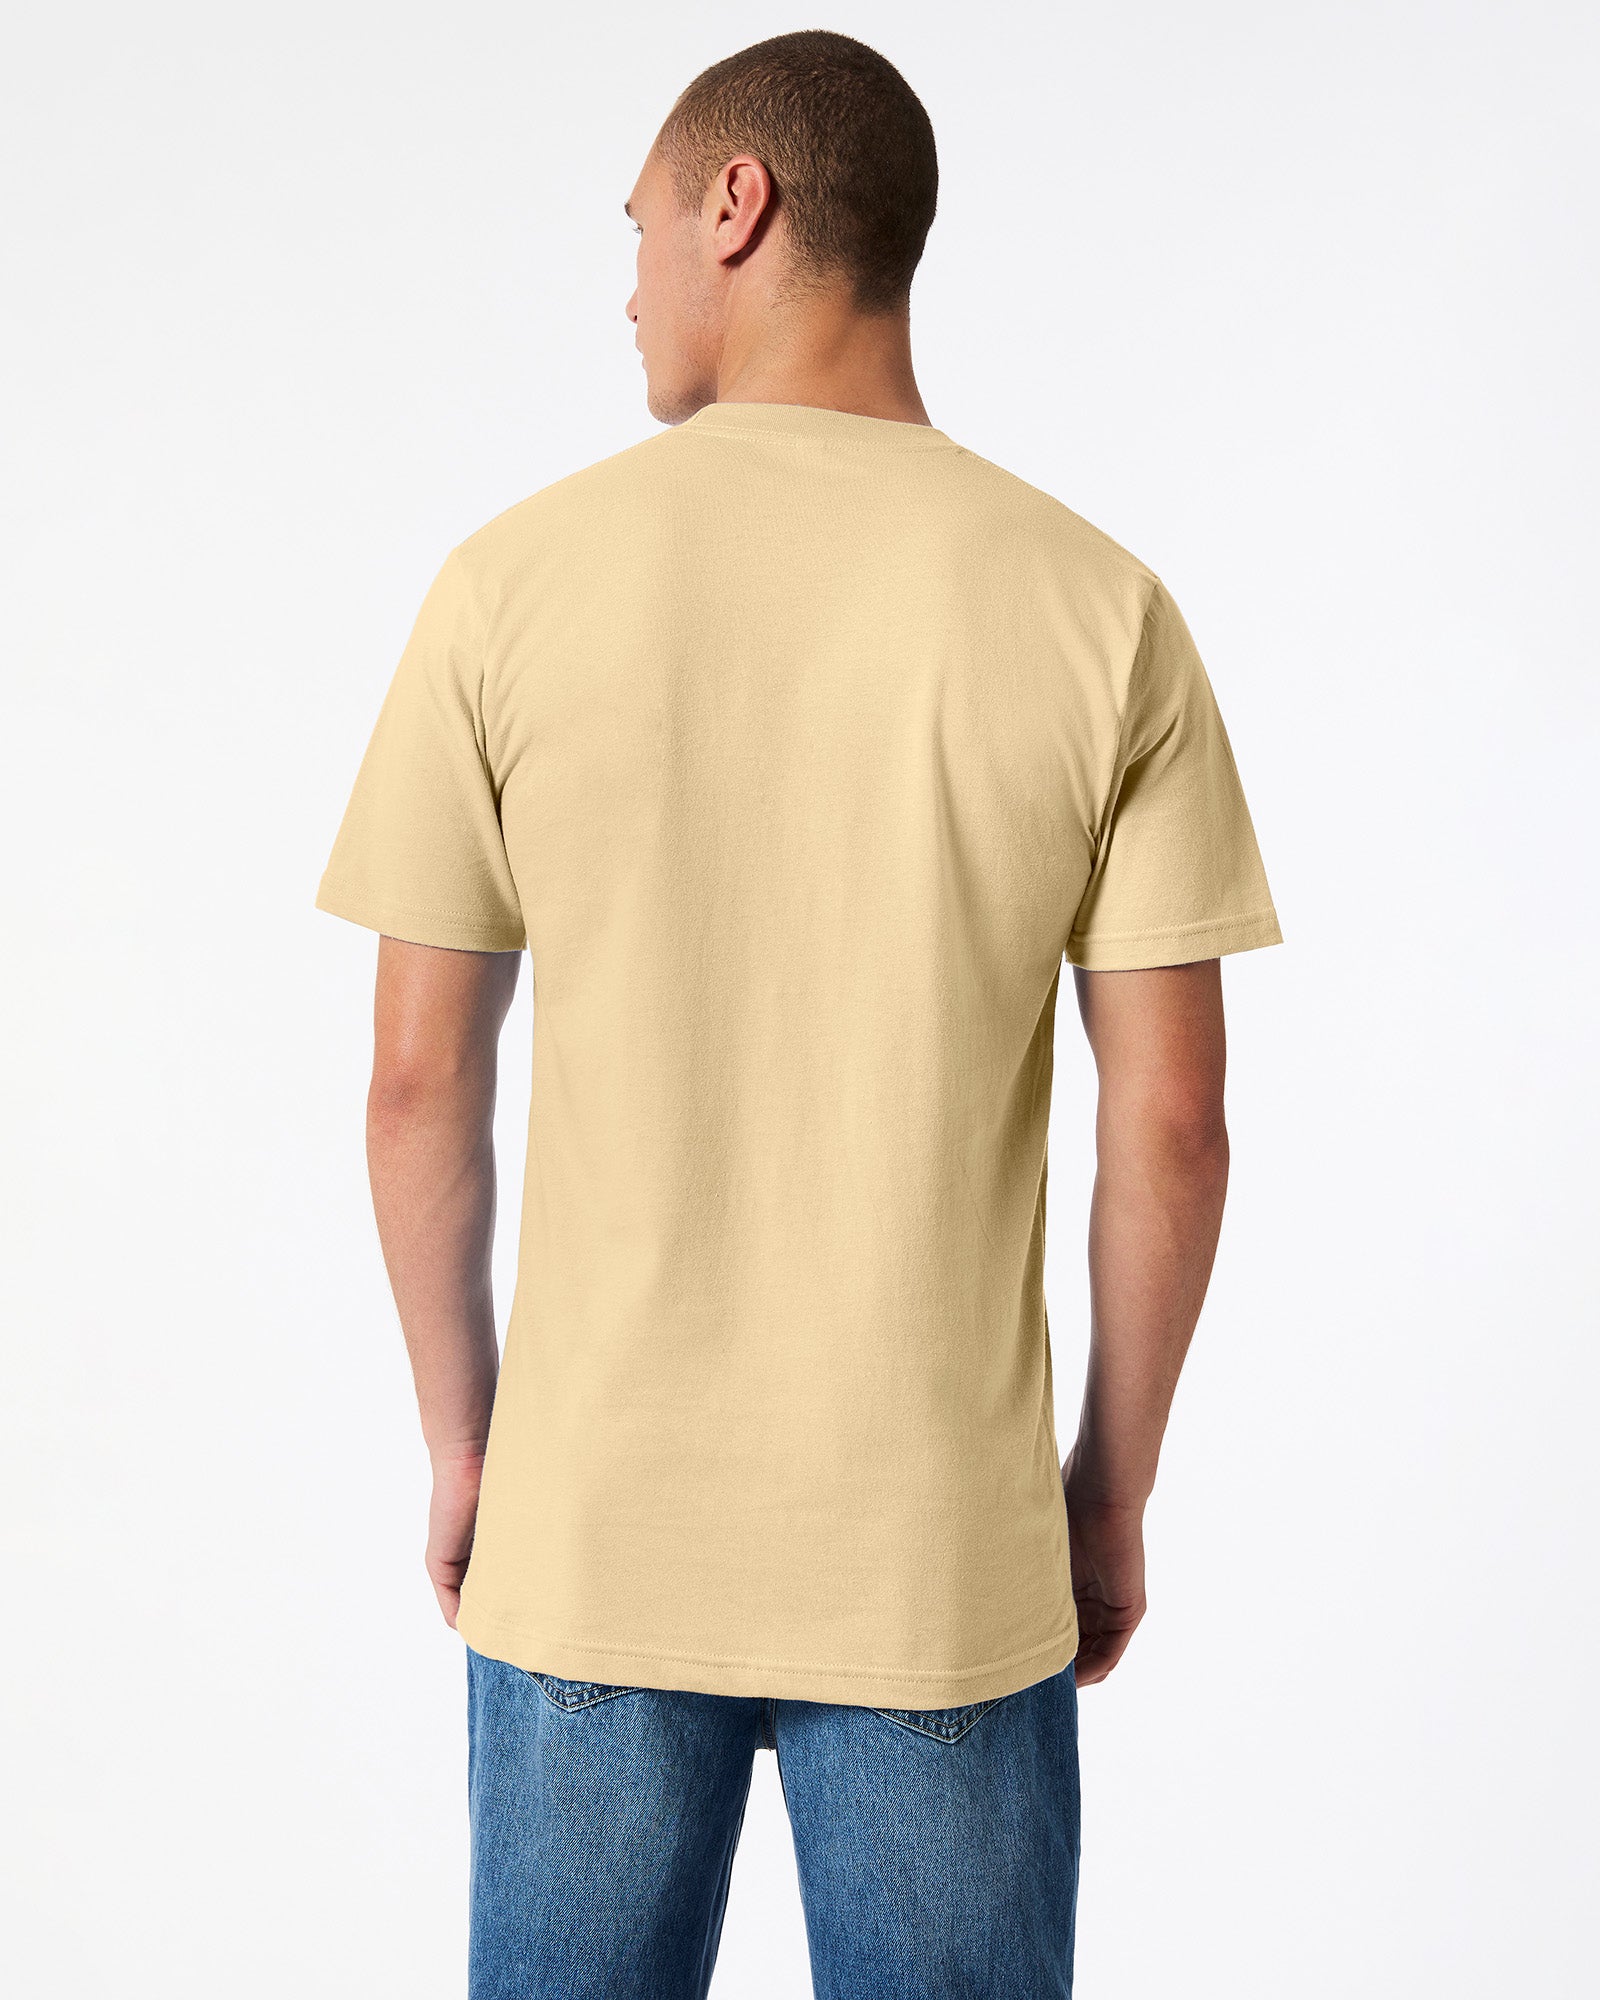 Fine Jersey Unisex Short Sleeve T-Shirt - Cream